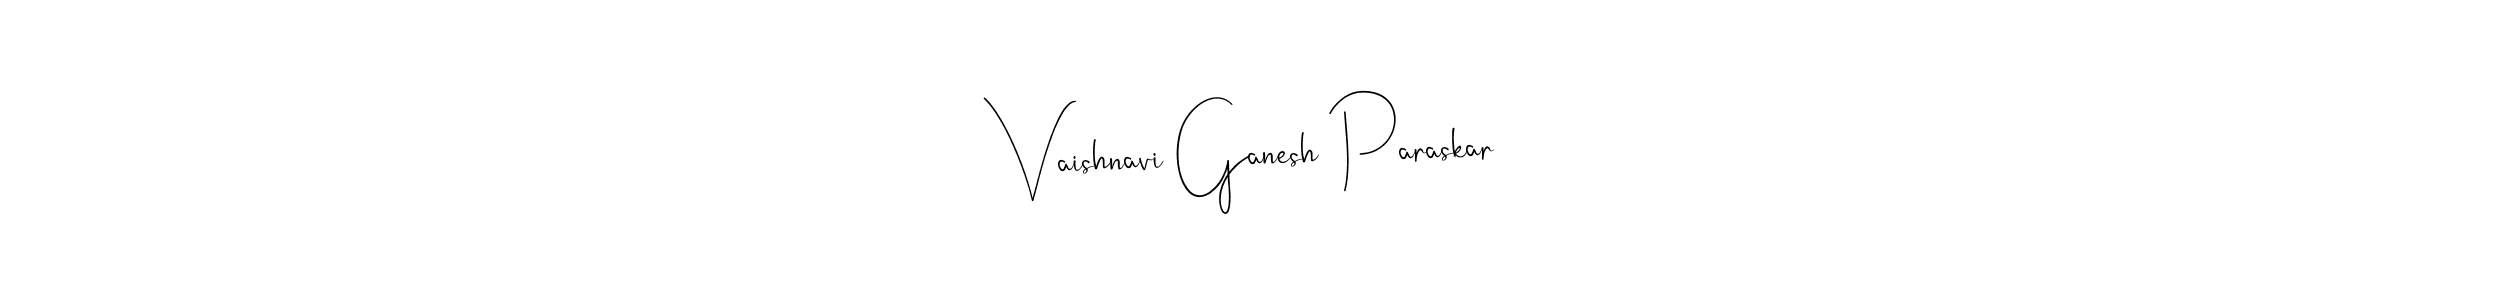 Vaishnavi Ganesh Paraskar stylish signature style. Best Handwritten Sign (Andilay-7BmLP) for my name. Handwritten Signature Collection Ideas for my name Vaishnavi Ganesh Paraskar. Vaishnavi Ganesh Paraskar signature style 4 images and pictures png